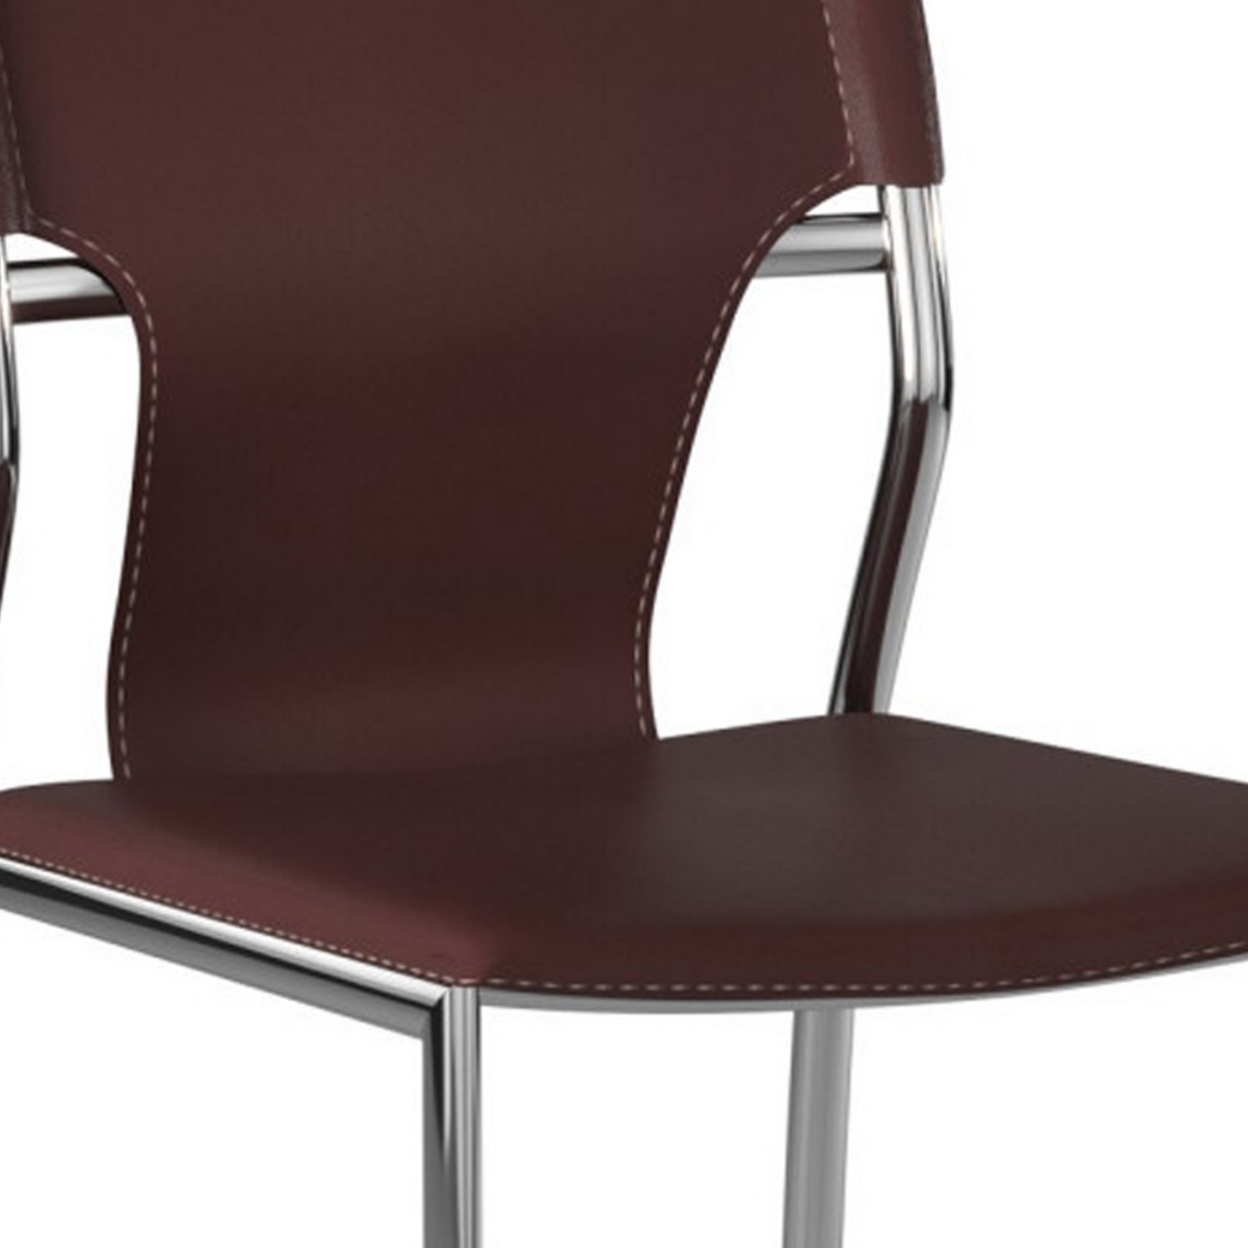 Jeb 18 Inch Modern Side Chair, Chrome Finished Base, Genuine Leather, Brown- Saltoro Sherpi